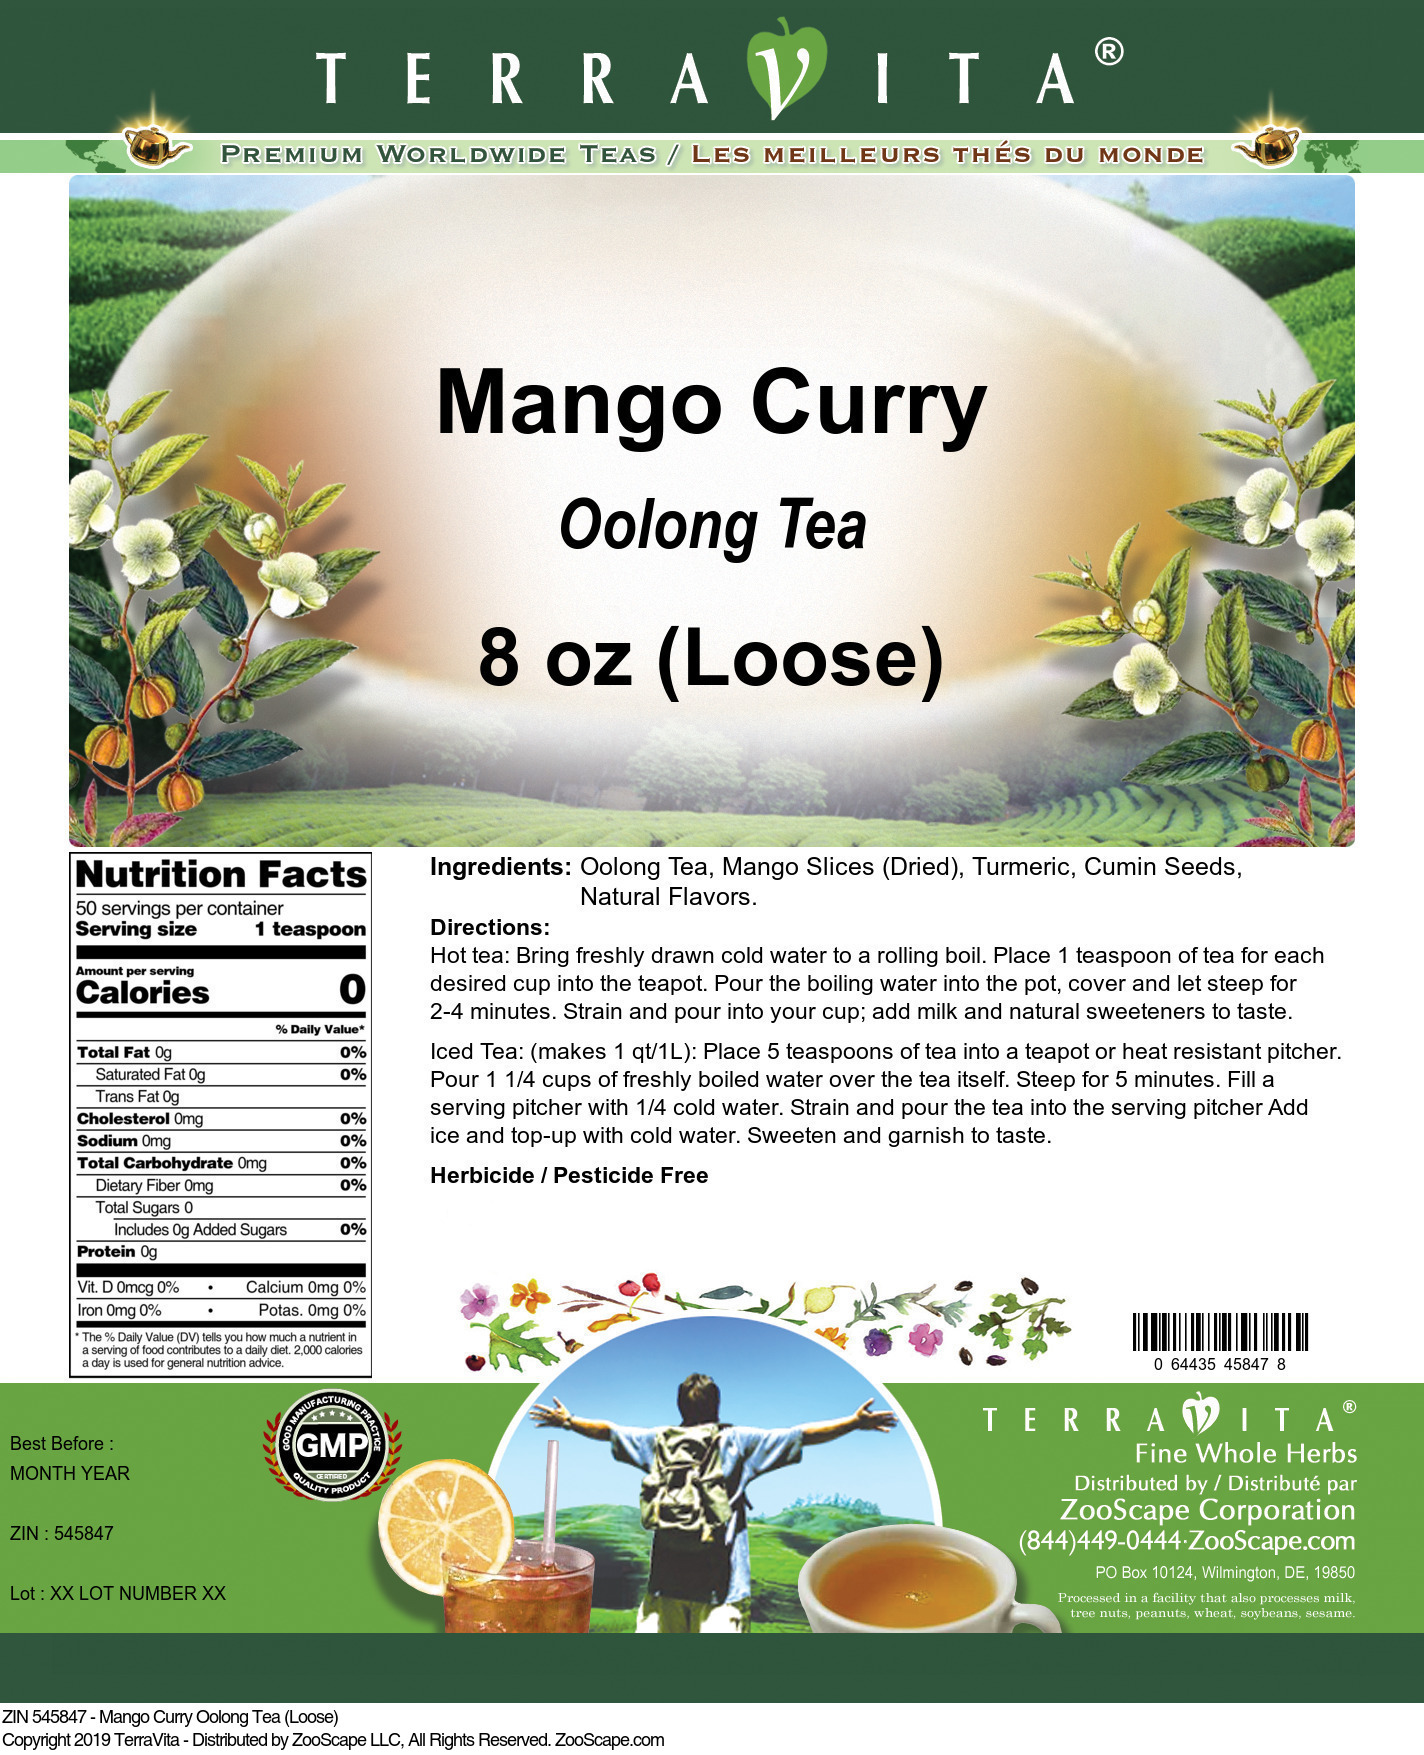 Mango Curry Oolong Tea (Loose) - Label